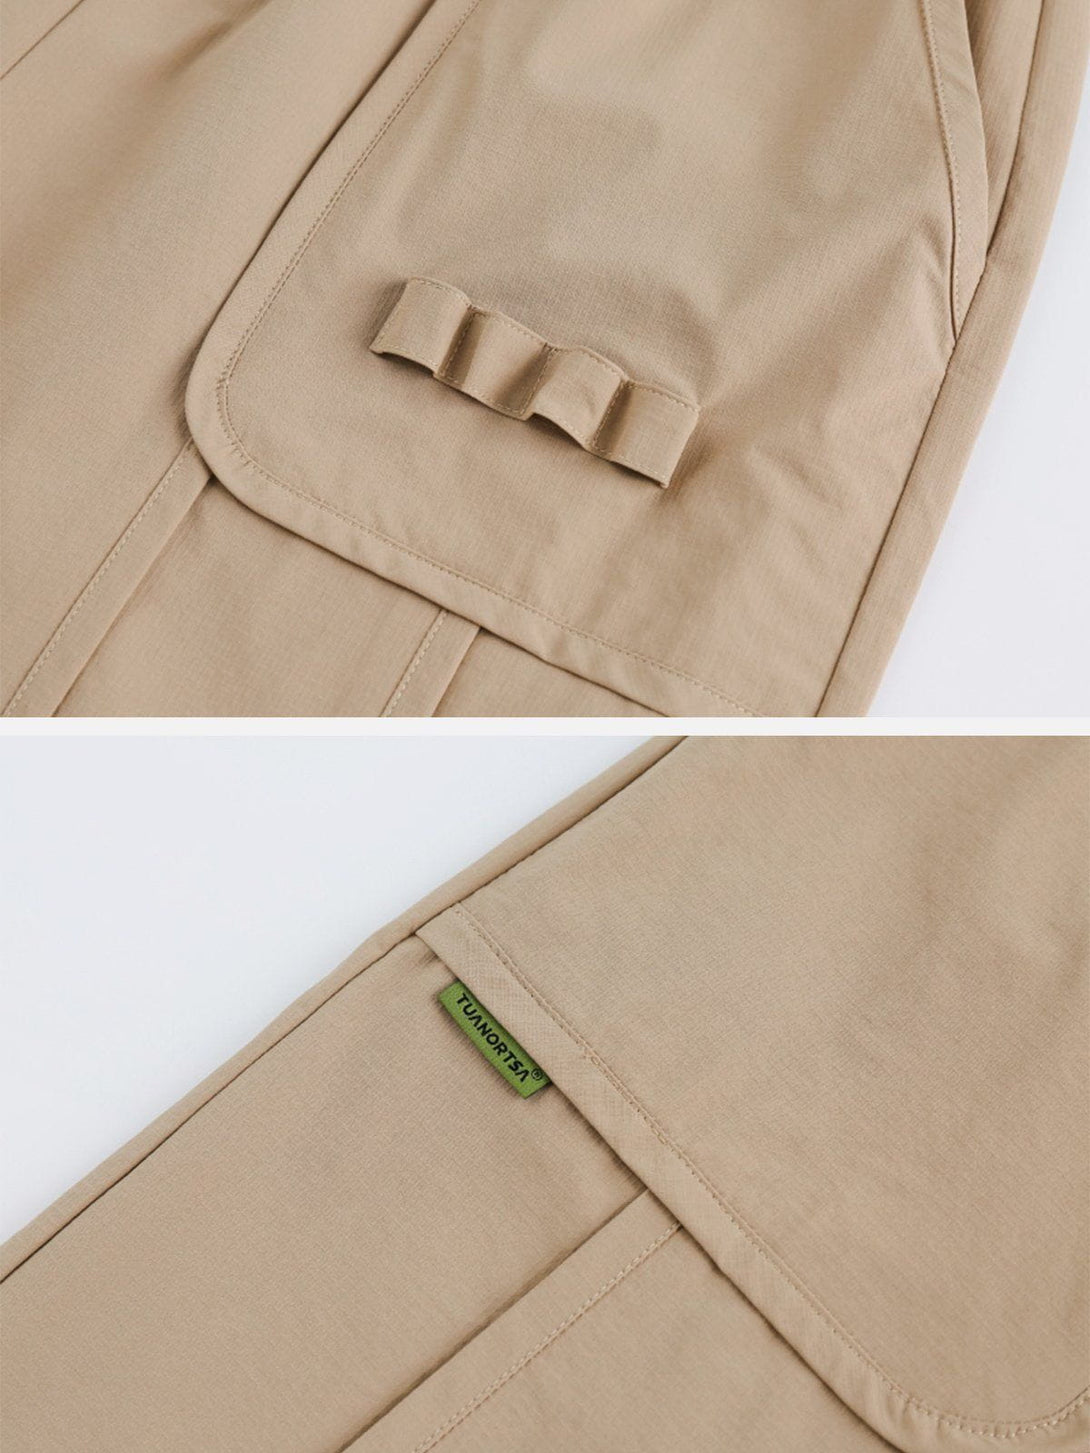 Majesda® - Three-dimensional Tailoring Design Cargo Pants outfit ideas streetwear fashion